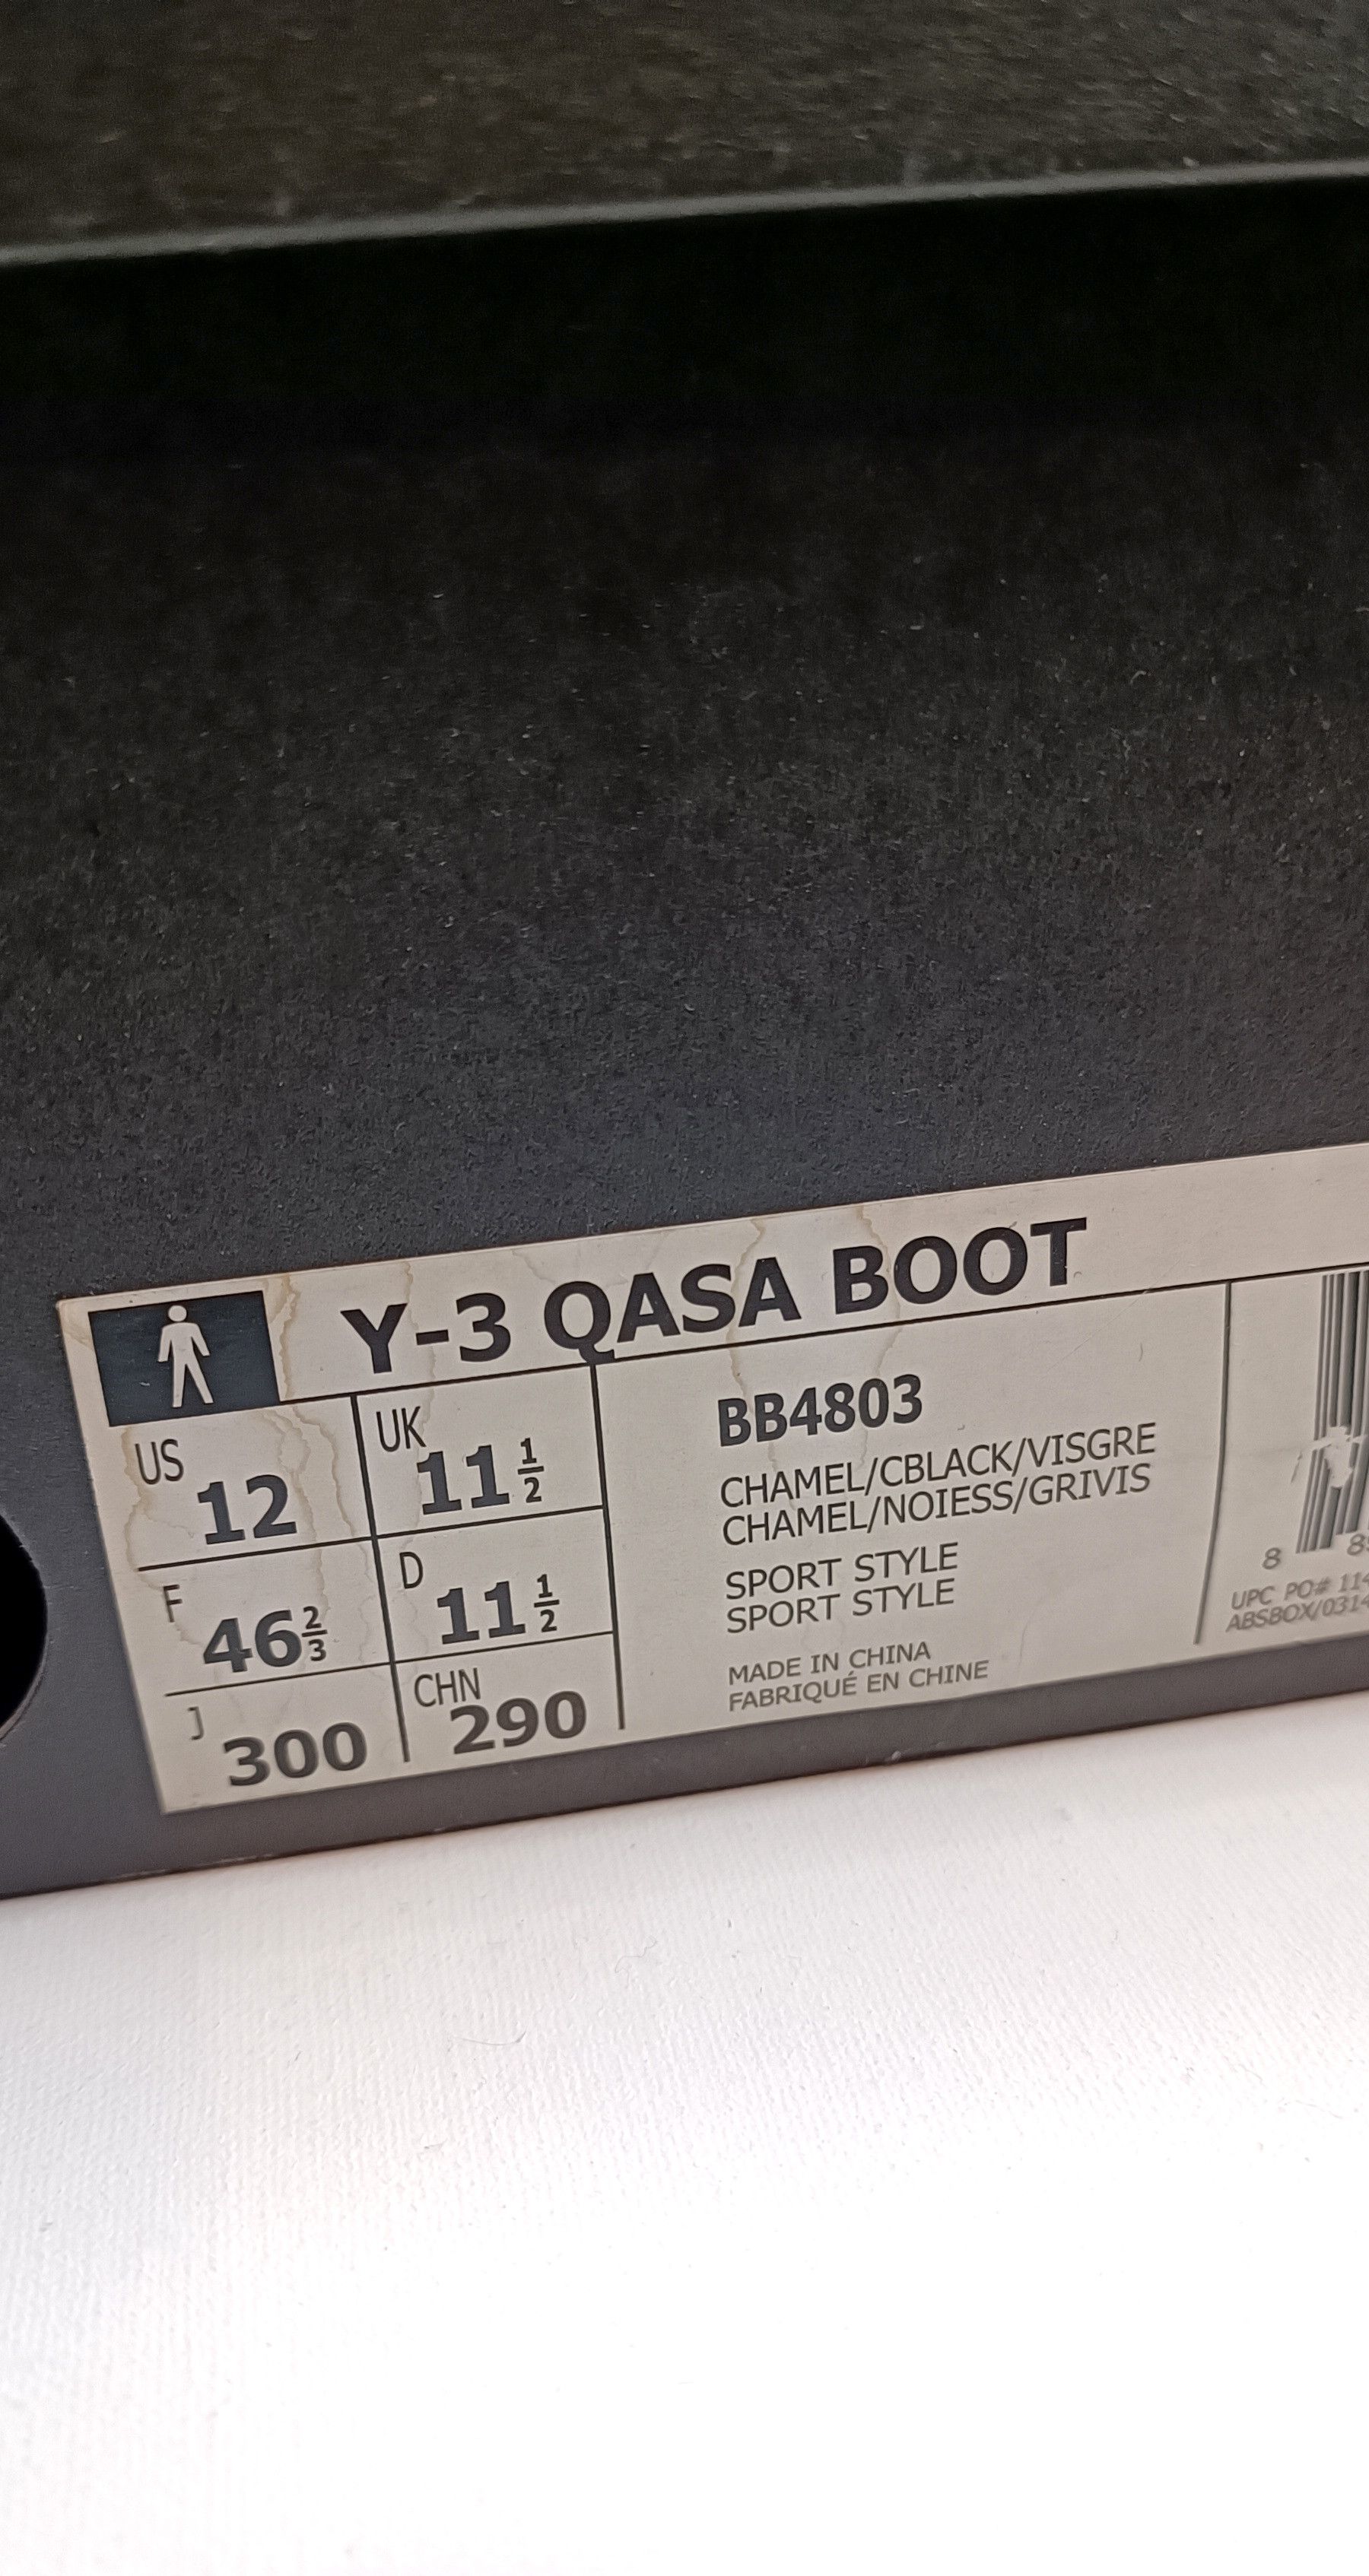 Adidas Y-3 Qasa Boot 'Charcoal Black' - 13